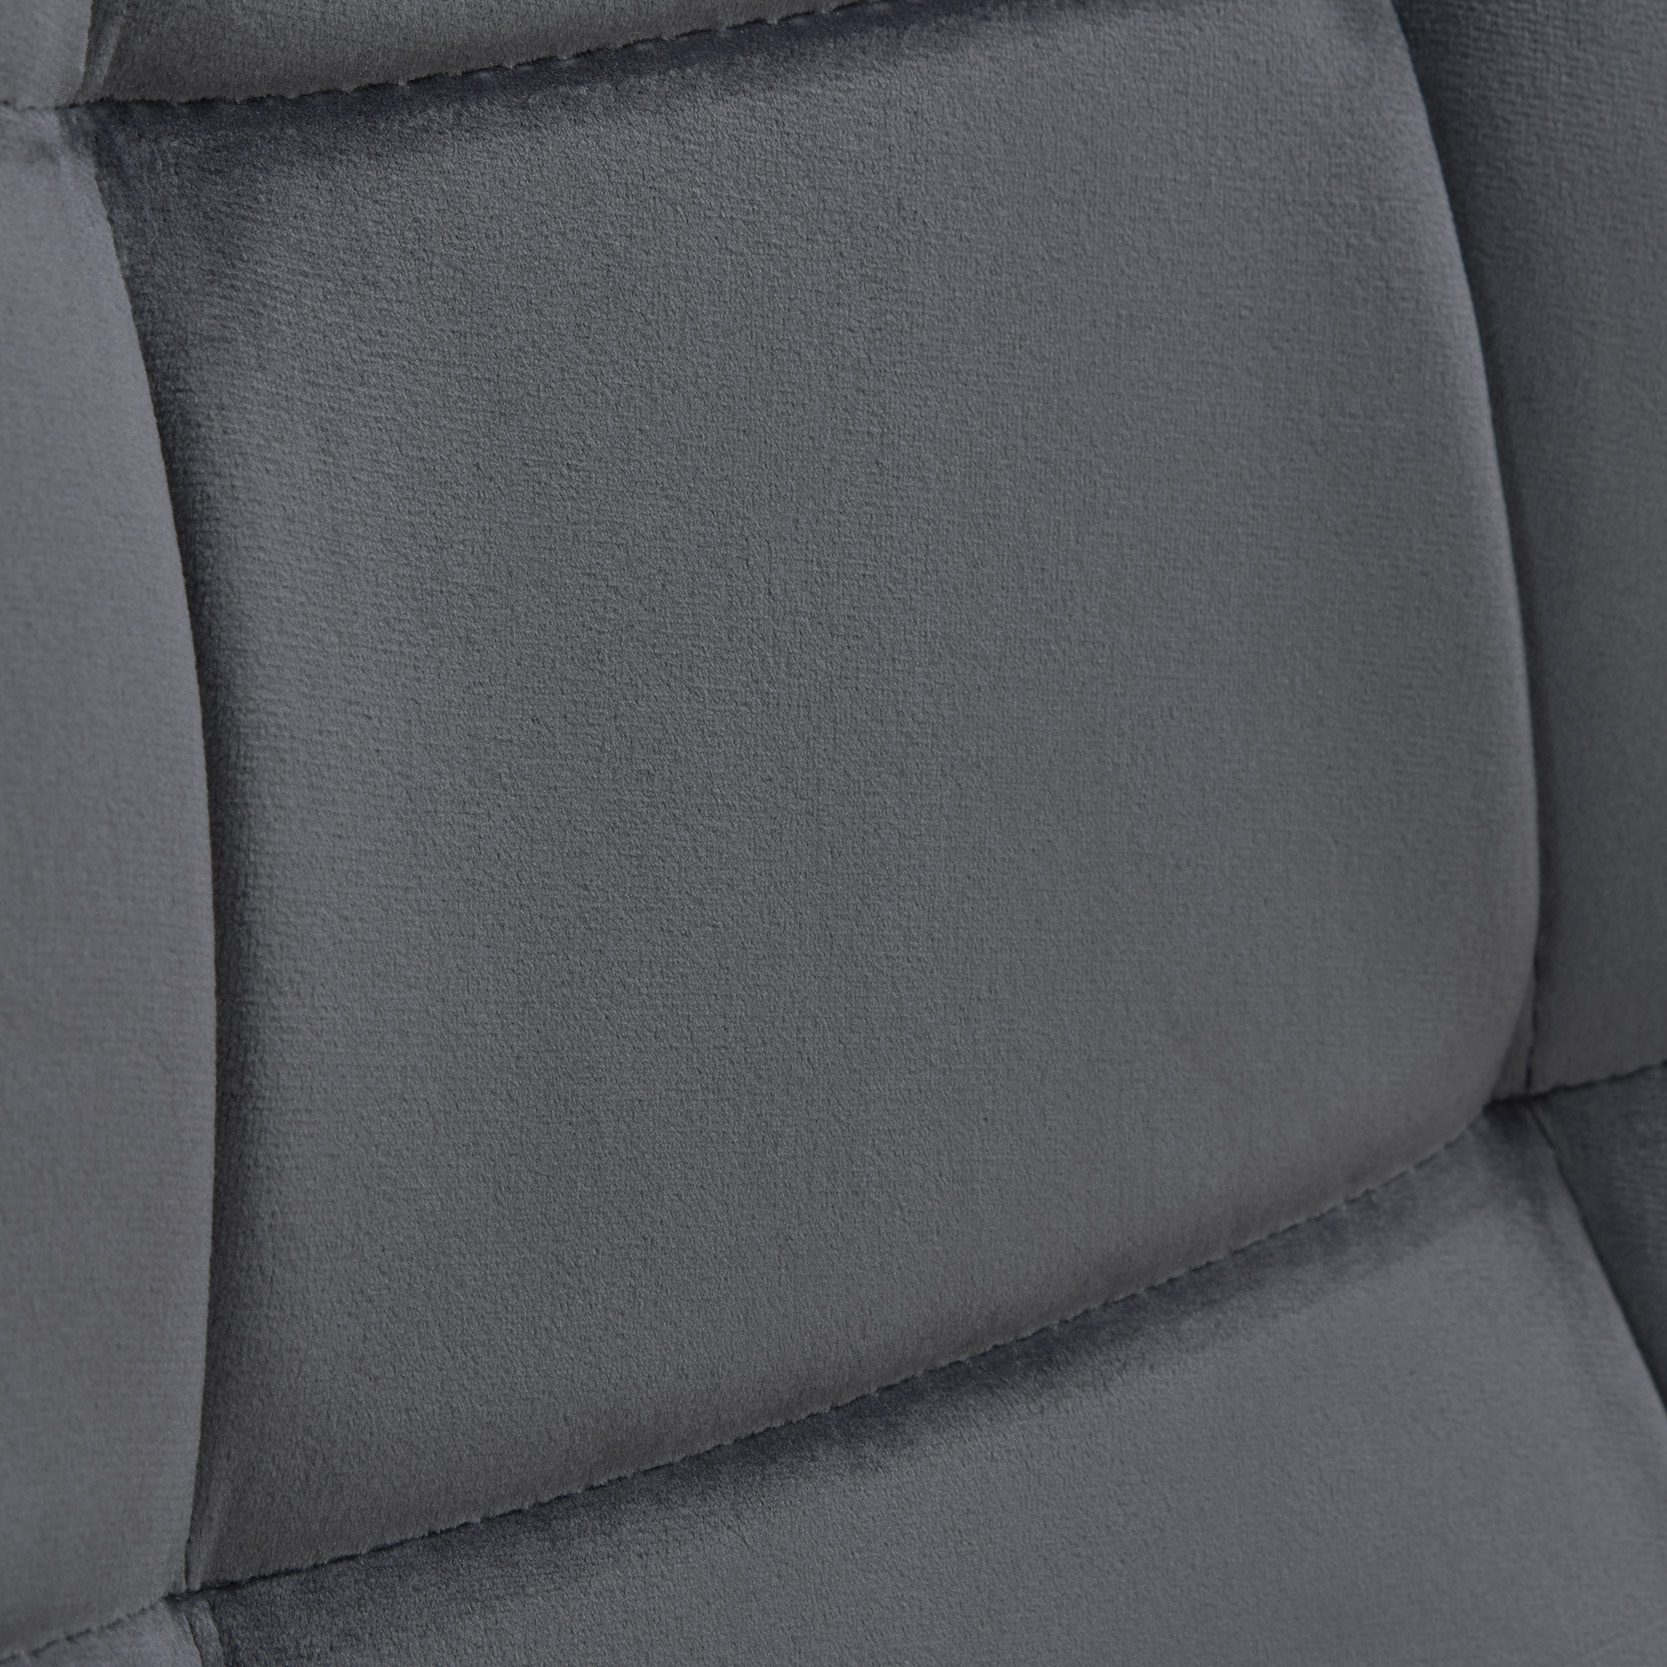 krzeslo nowoczesne tapicerowane velvet austin materiał